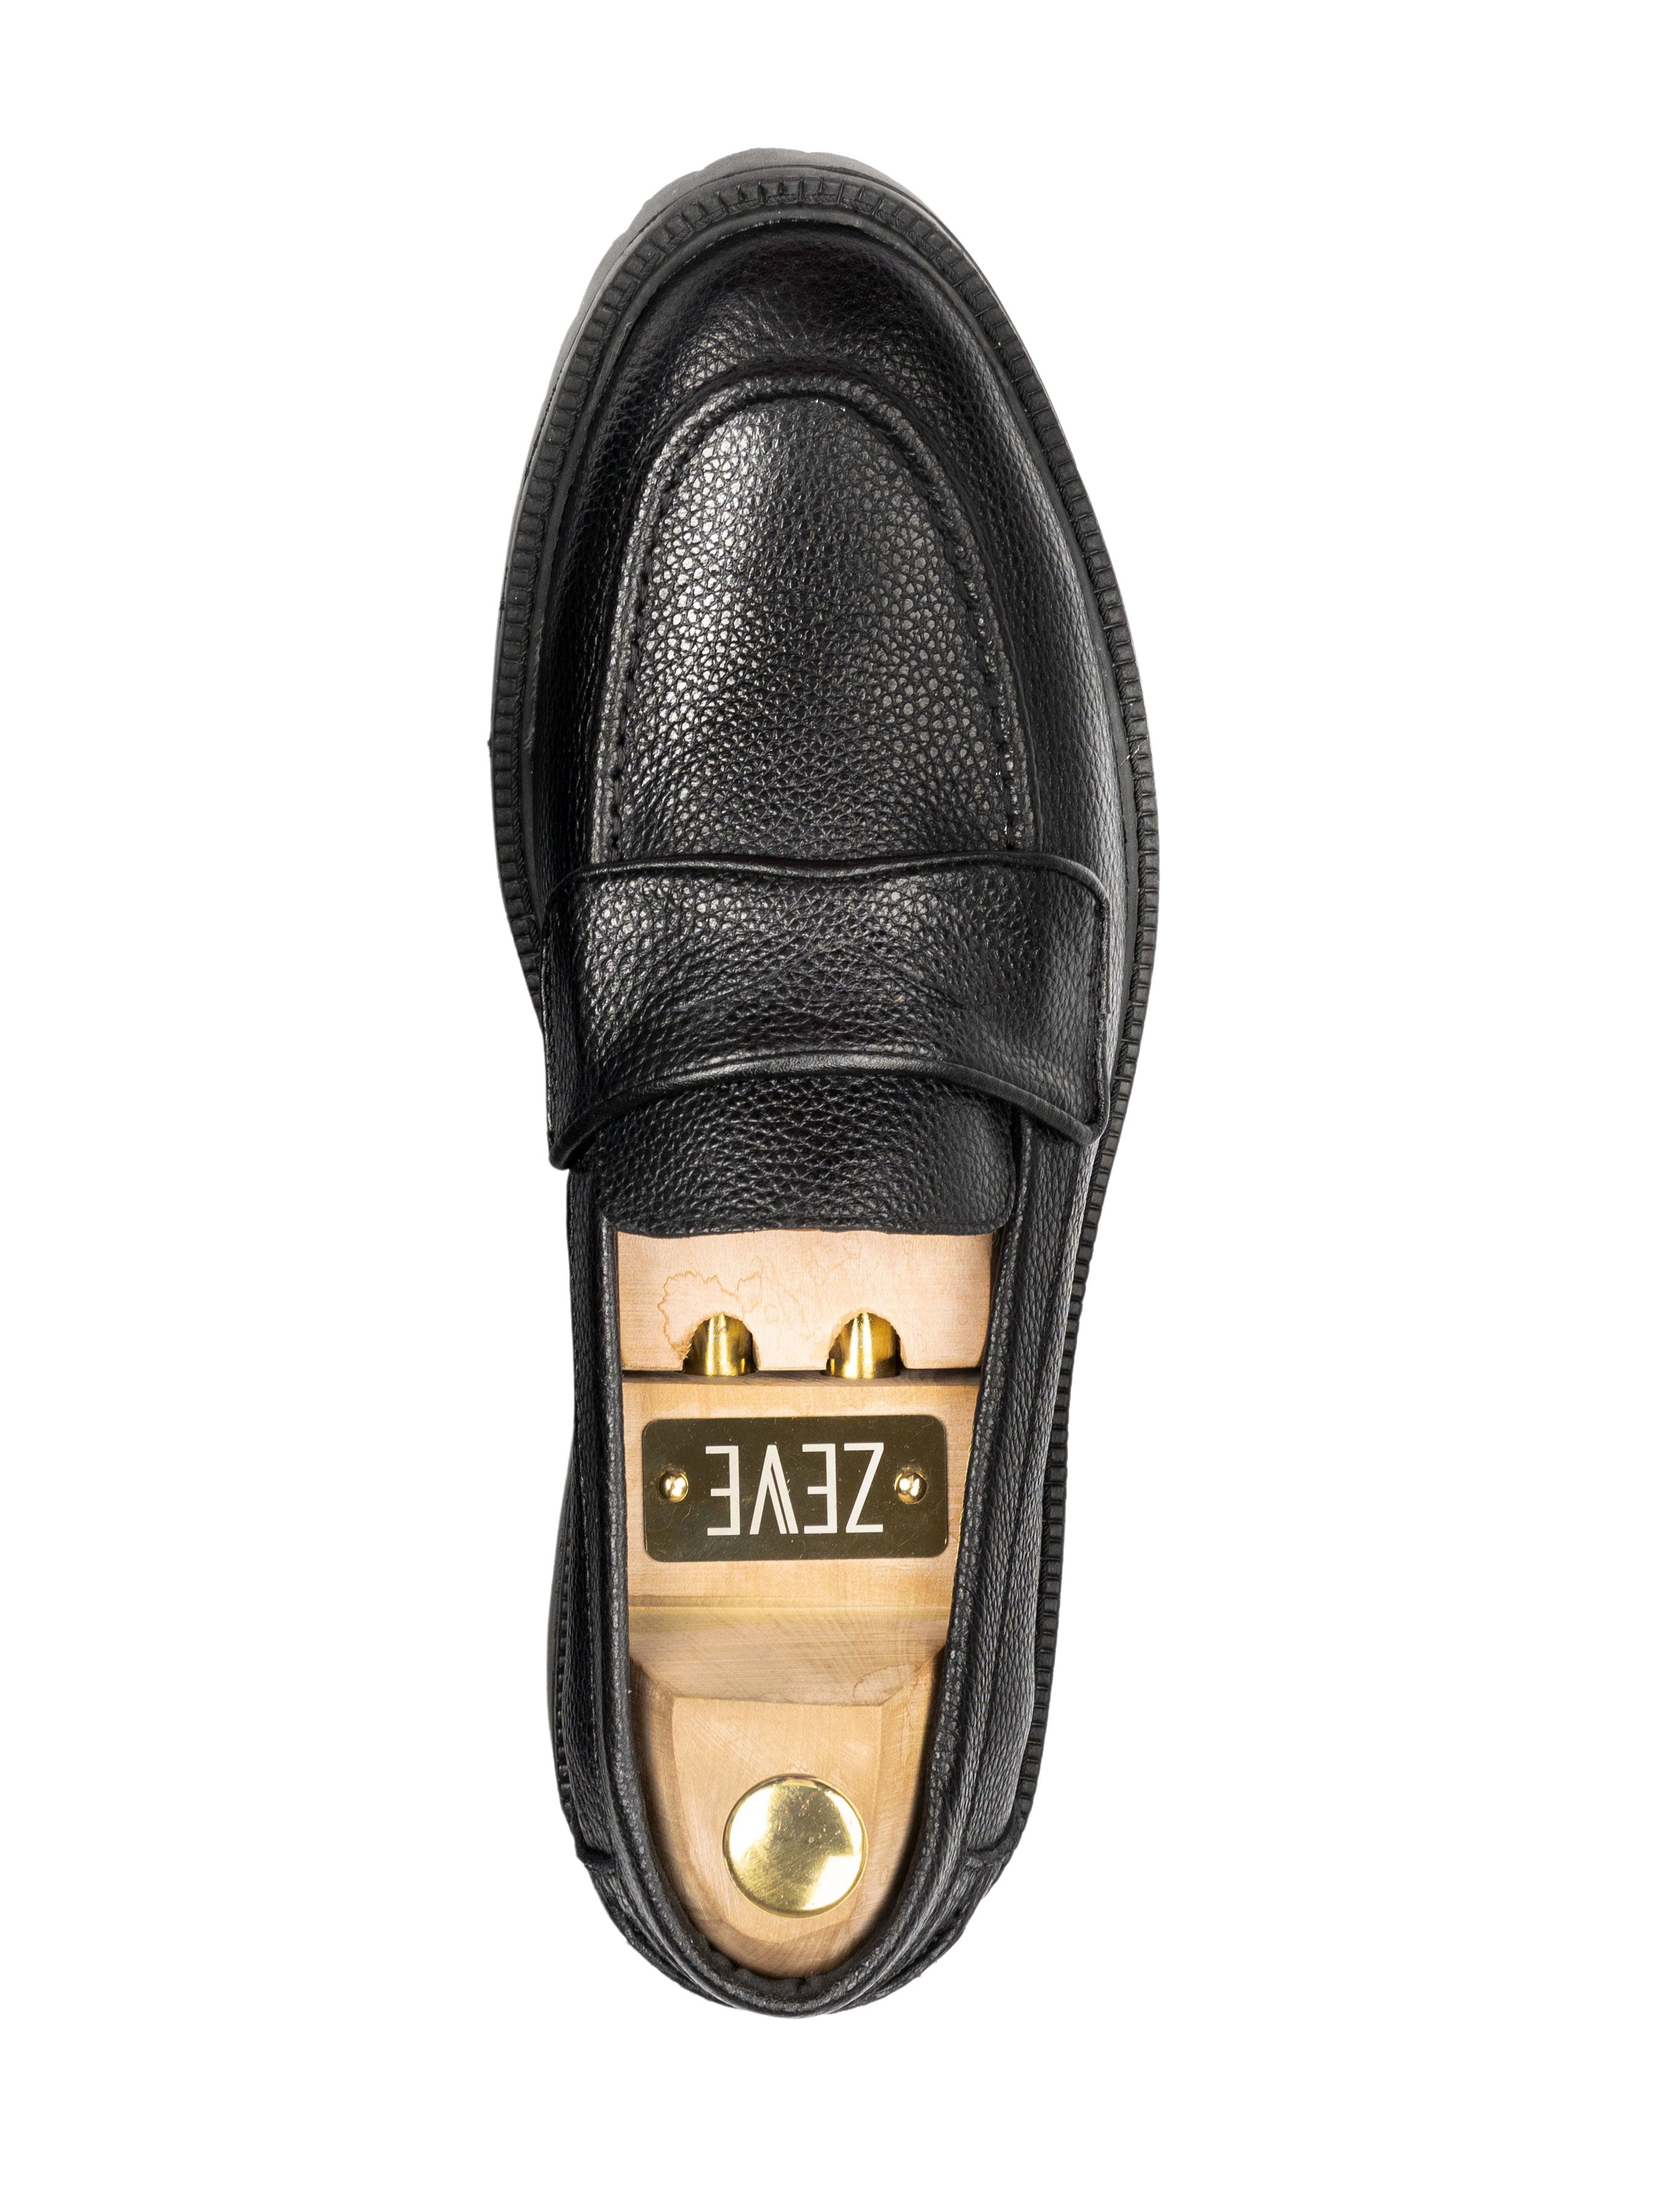 Wayne Penny Loafer - Black Pebble Grain Leather (Combat Sole) - Zeve Shoes